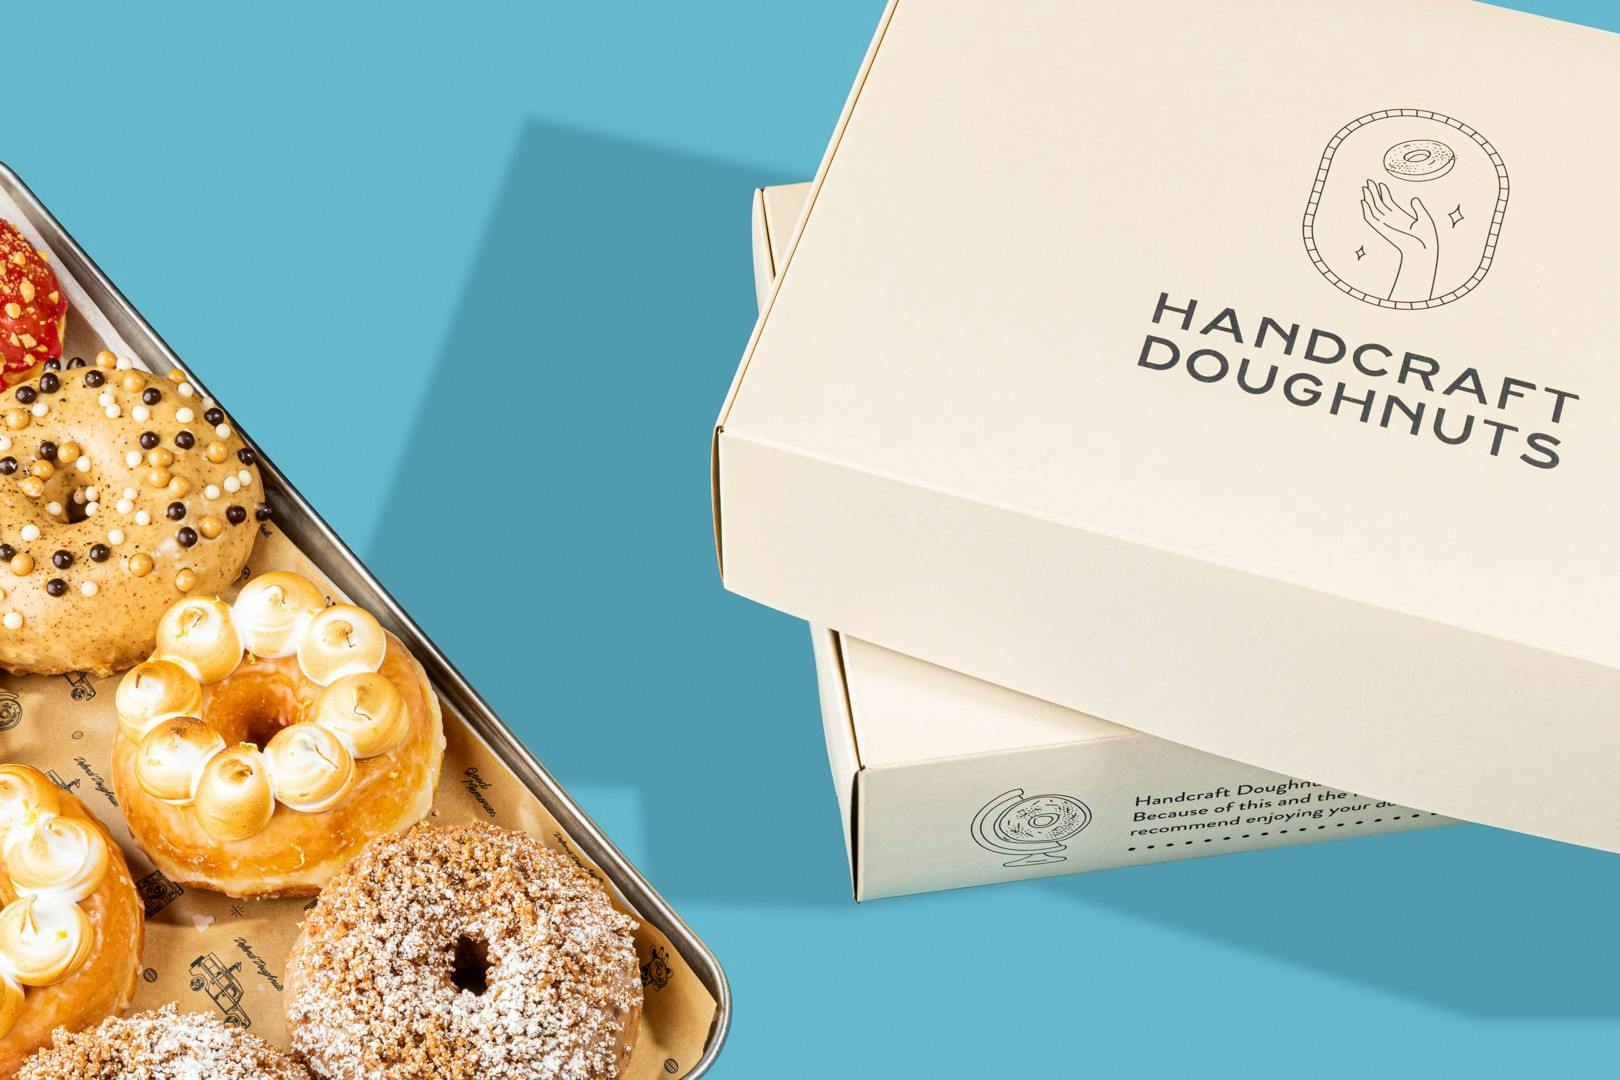 Handcraft Doughnuts Packaging Design featured image